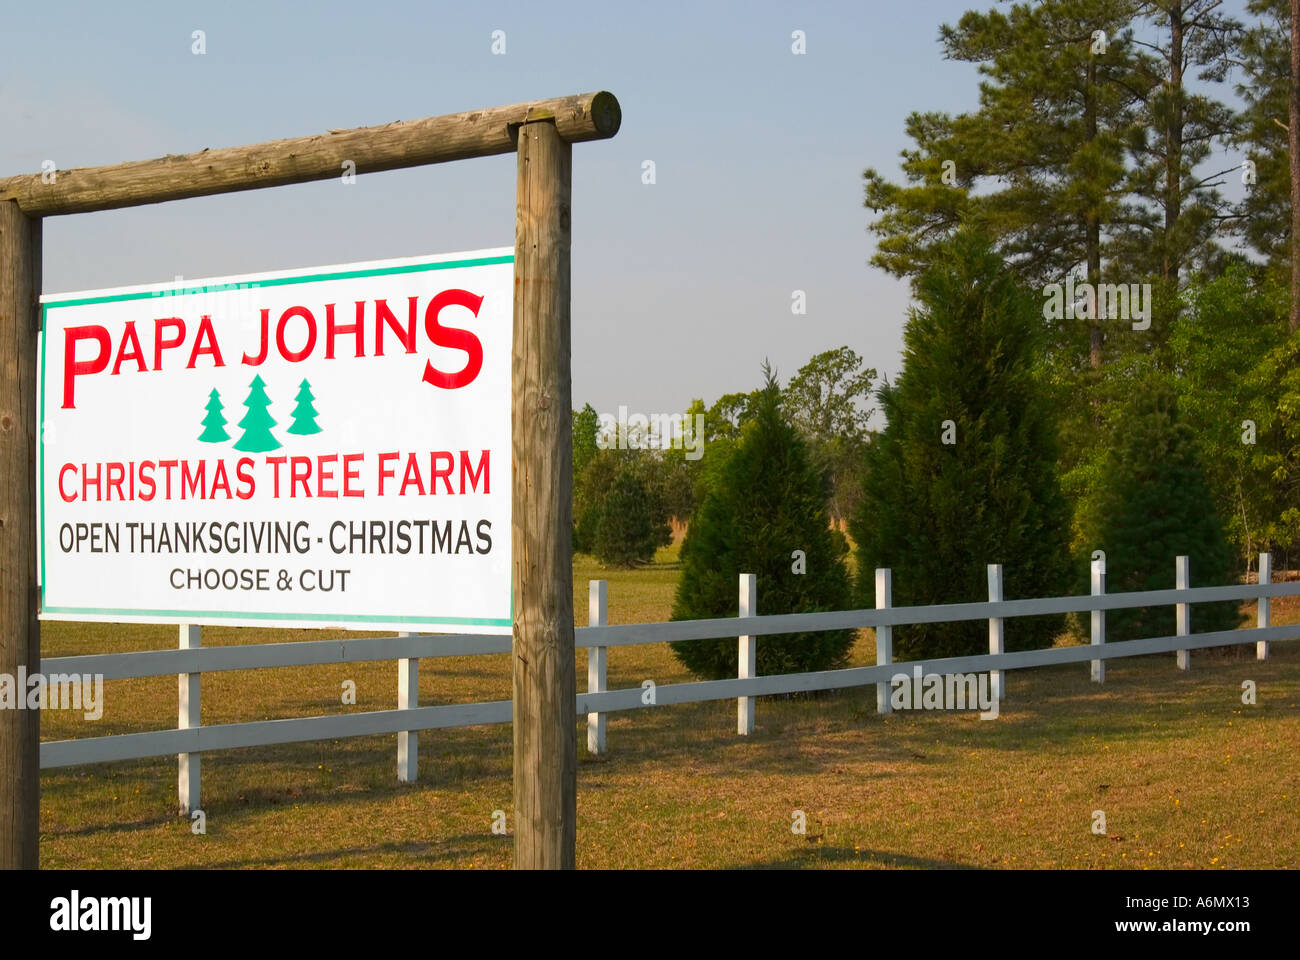 Papa Johns Christmas tree farm South Carolina USA Stock Photo: 3791378